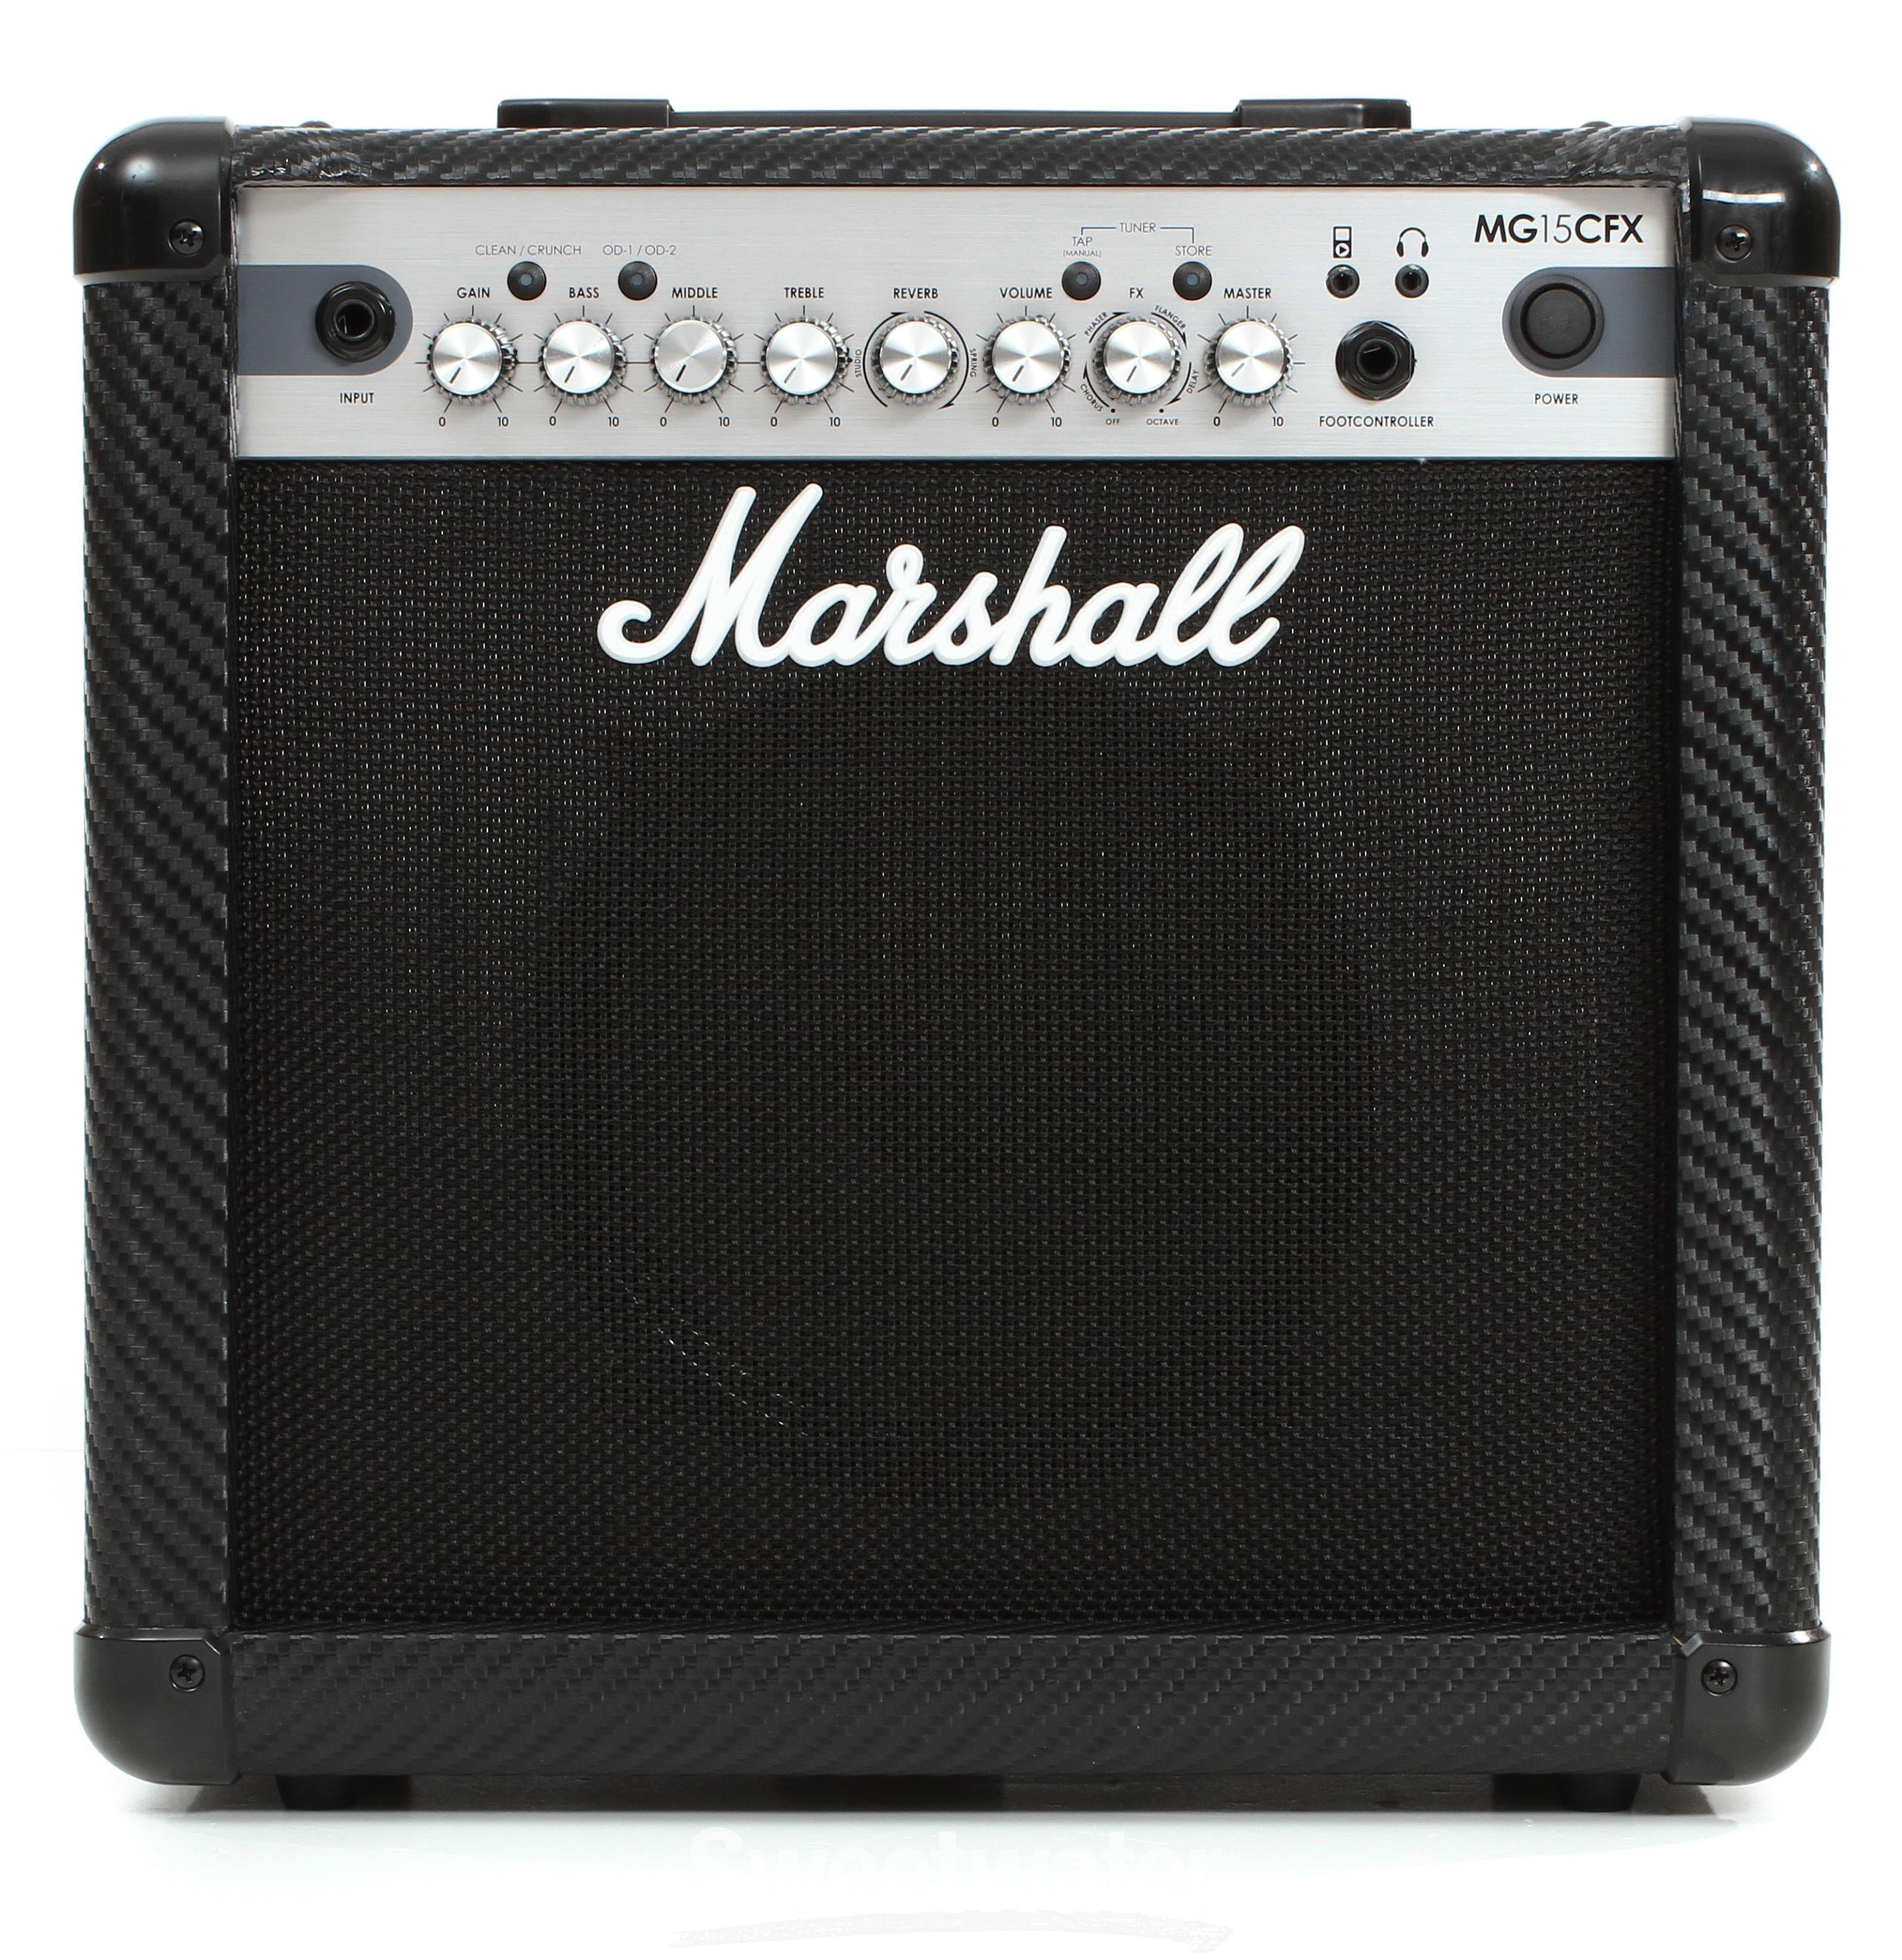 Marshall MG15CFX 15-watt 1x8